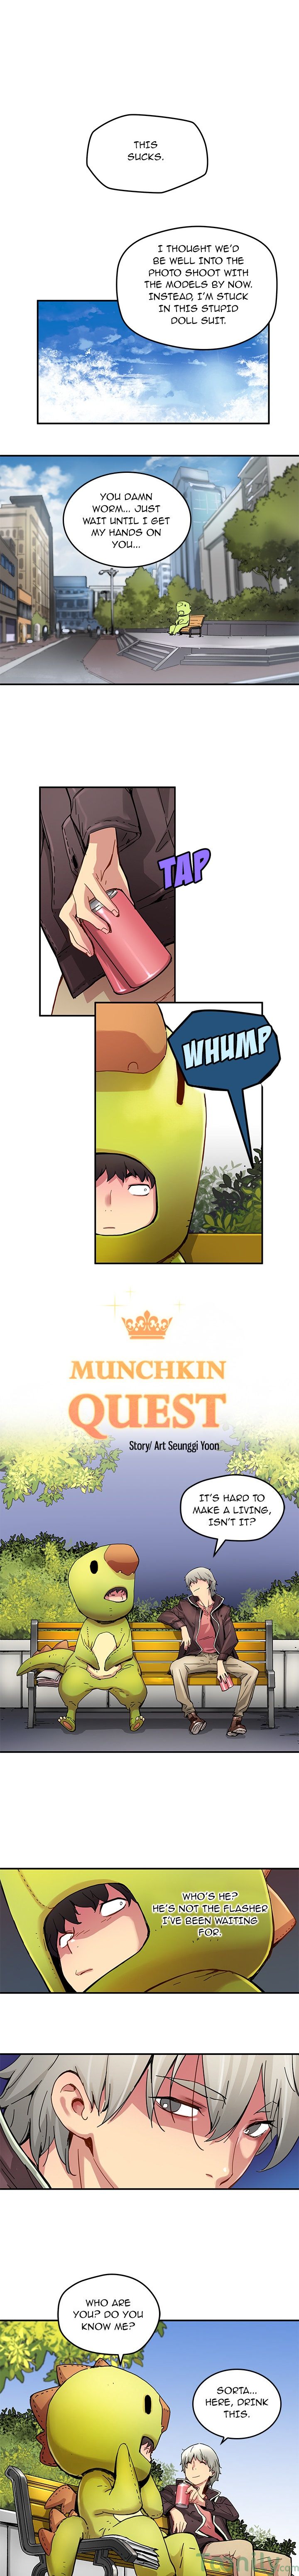 Munchkin Quest image